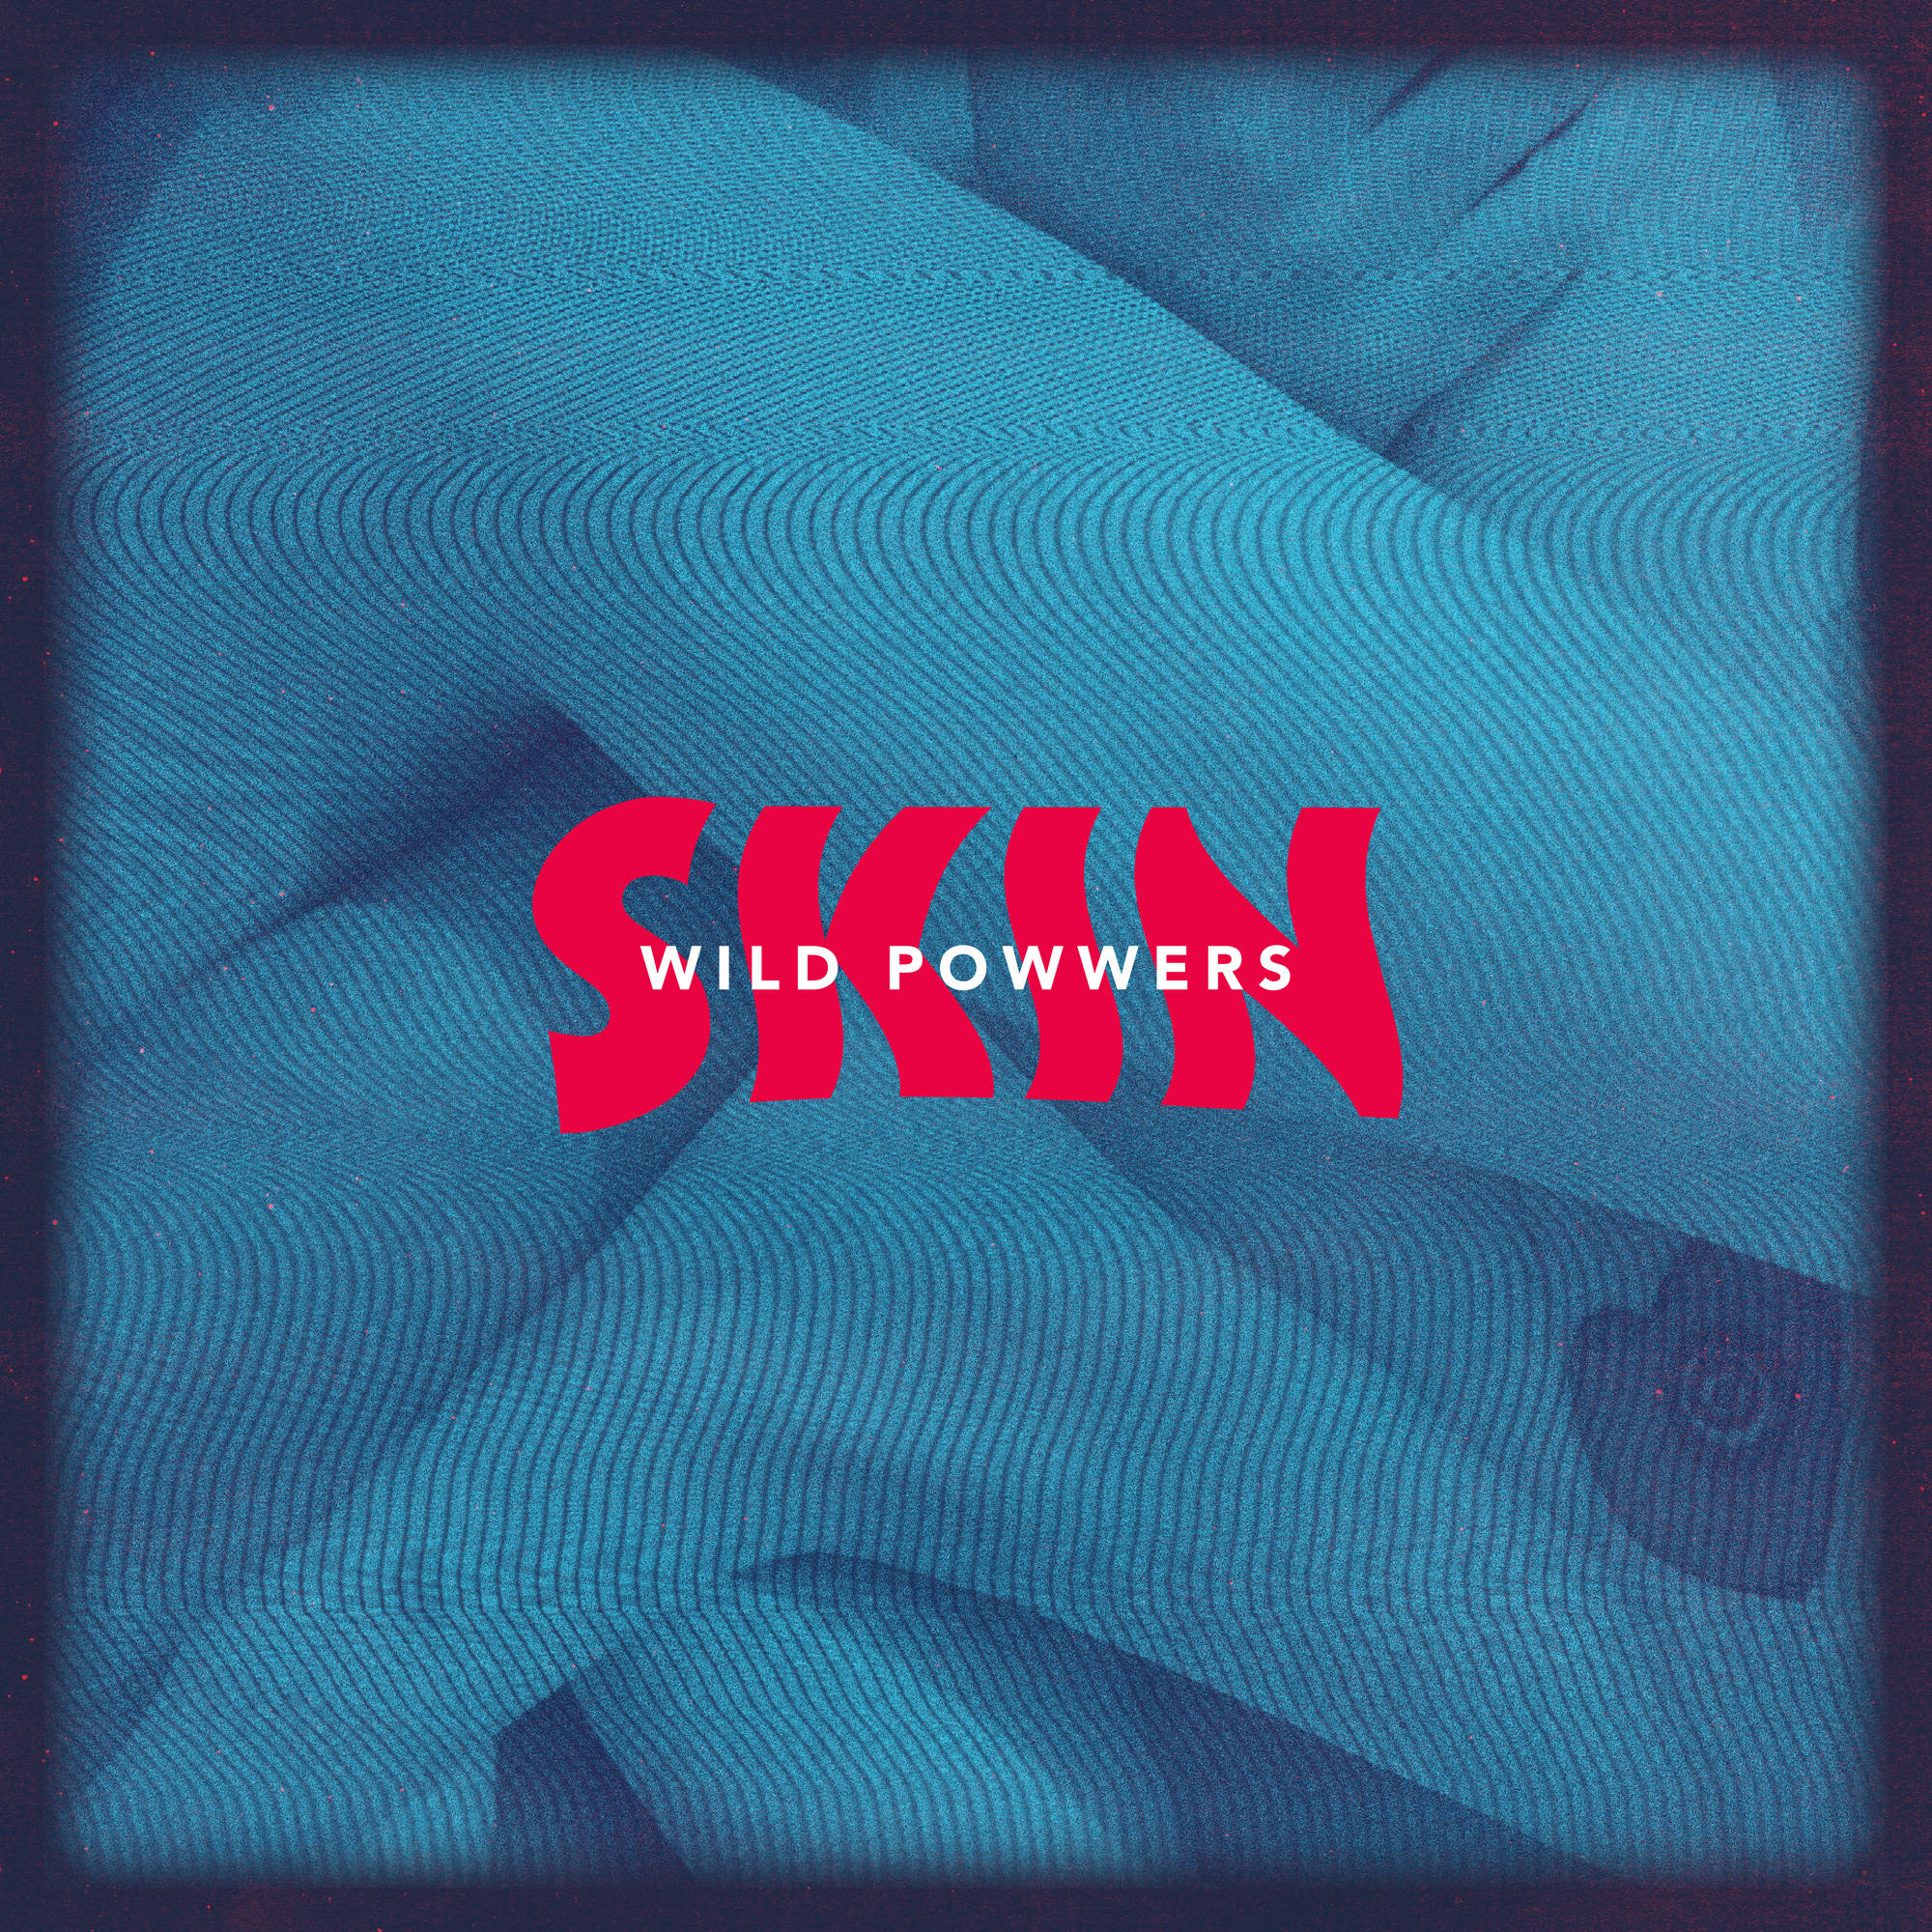 Wild Powwers Gets Under Your ‘Skin’